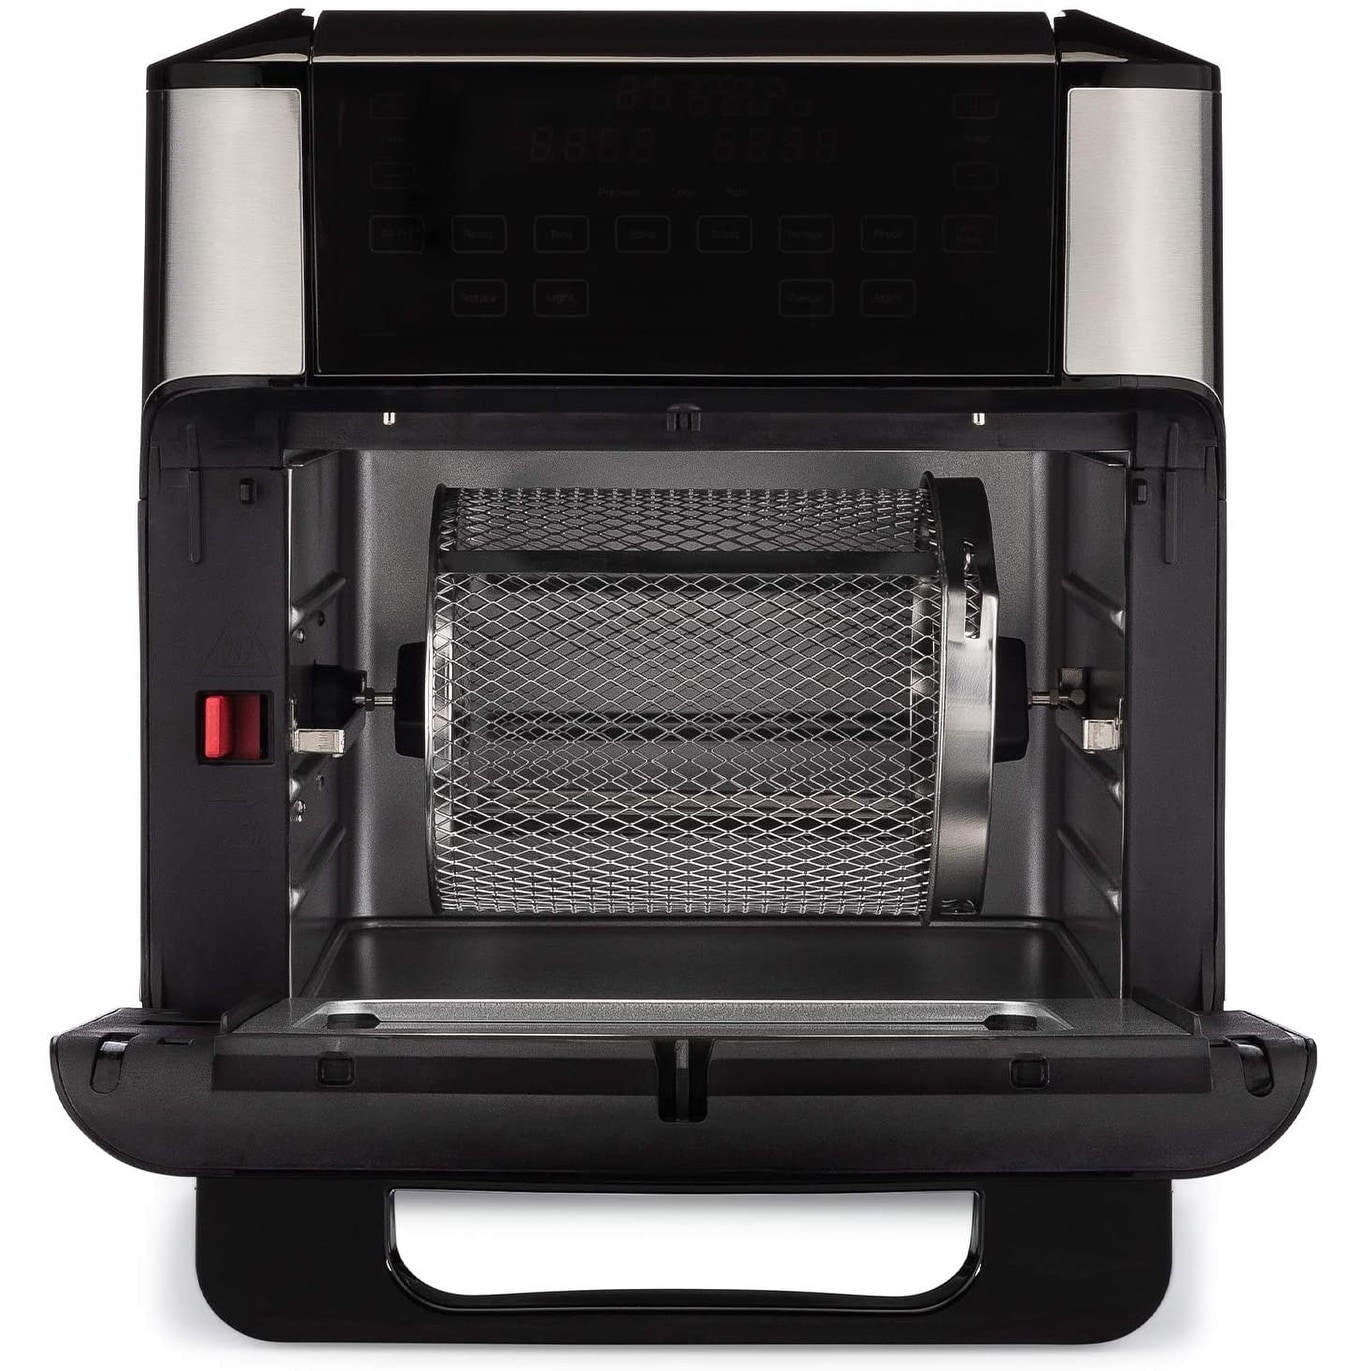 Instant Vortex Pro Air Fryer, 9-in-1 Rotisserie and Oven, 10-Quart